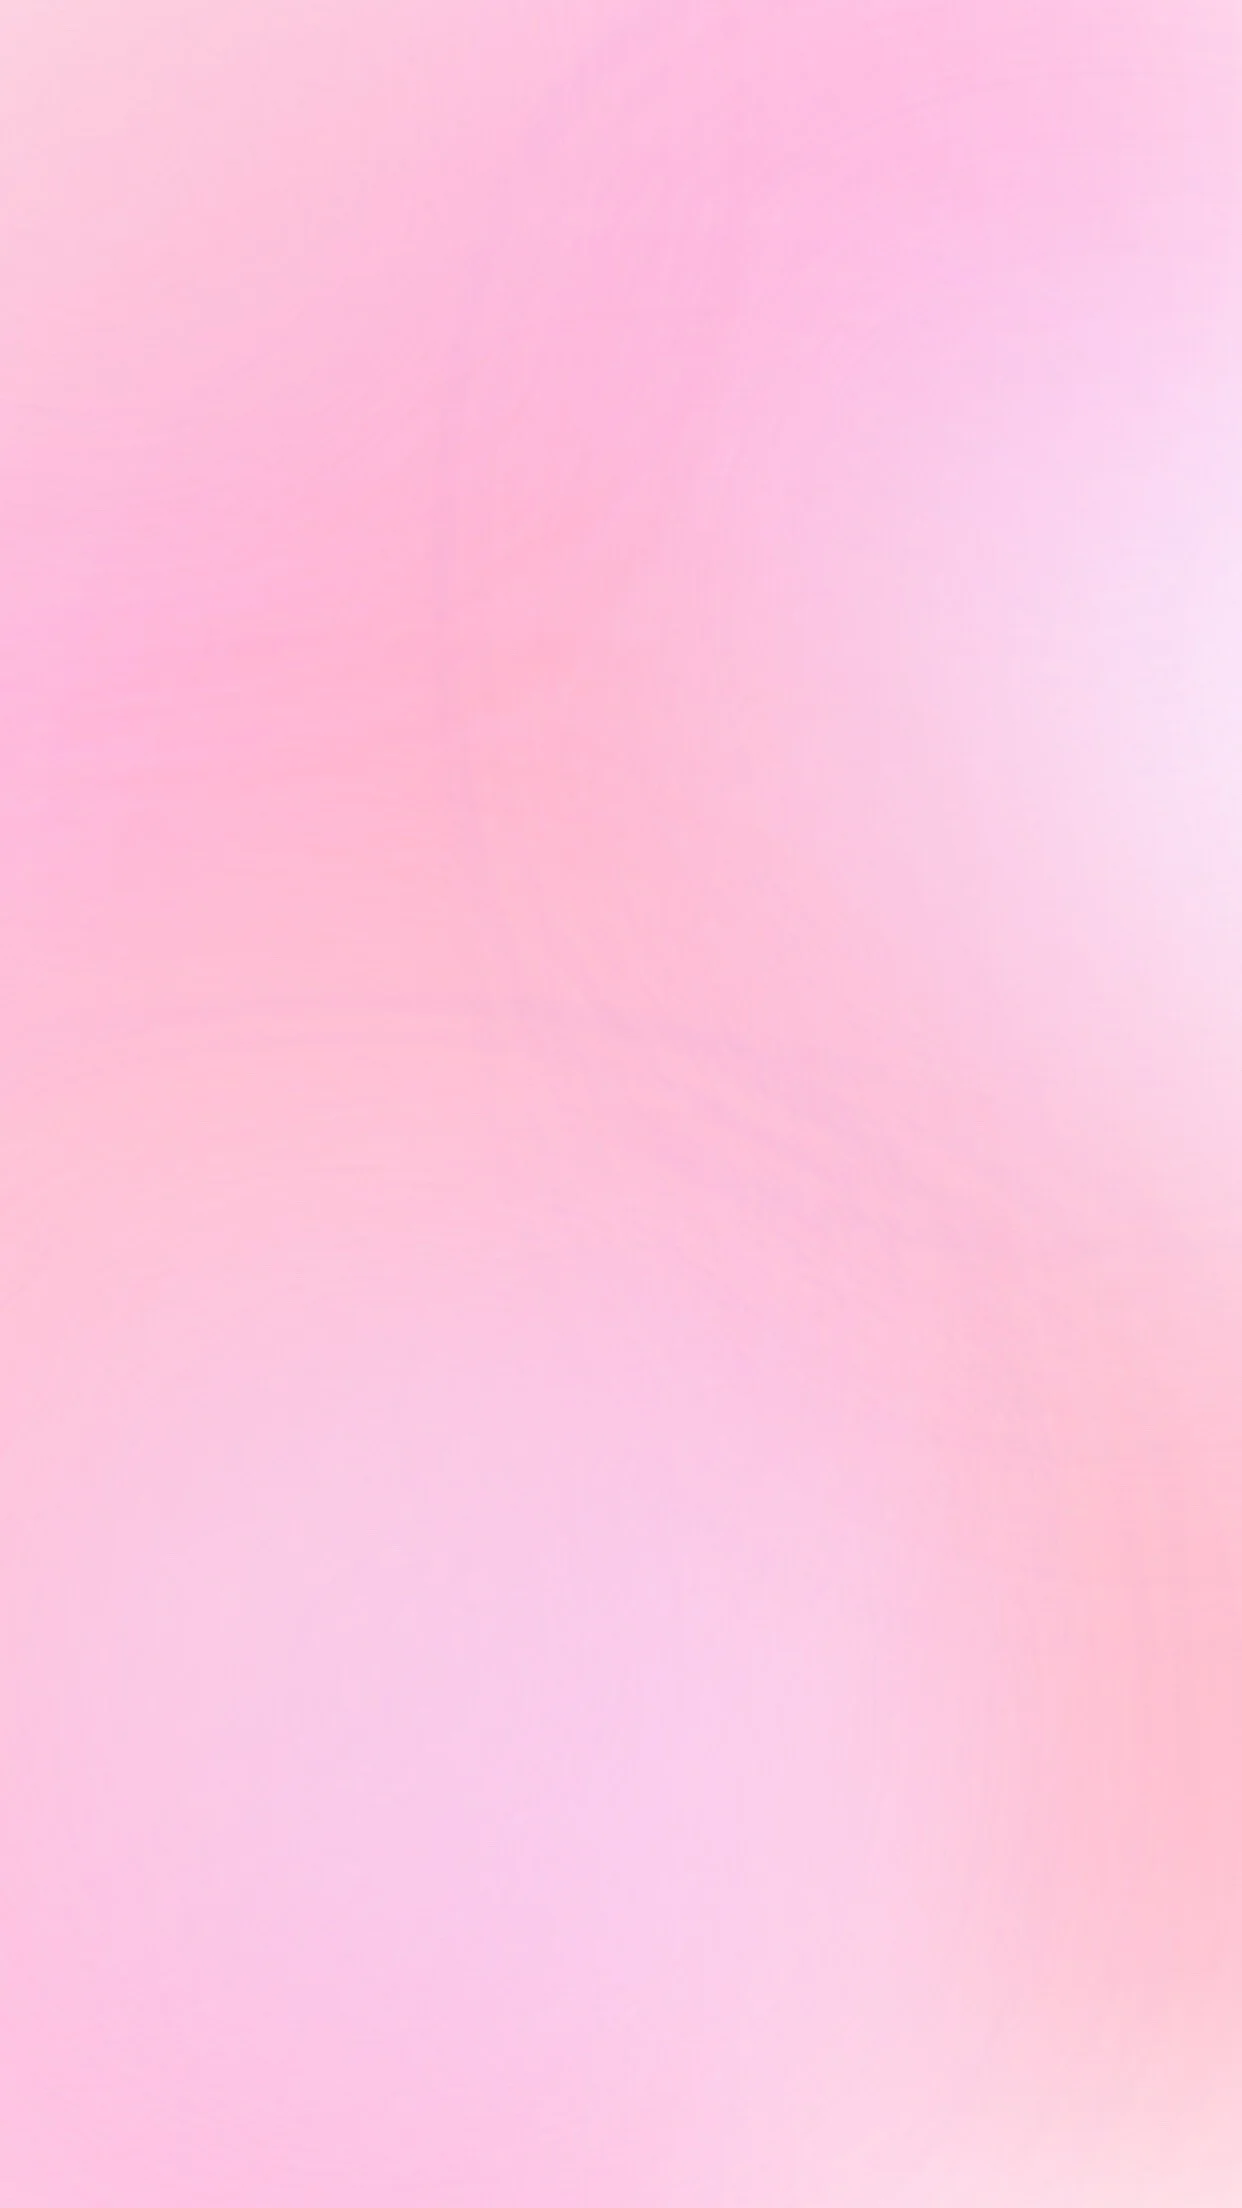 Pastel pink ombre gradient phone wallpaper